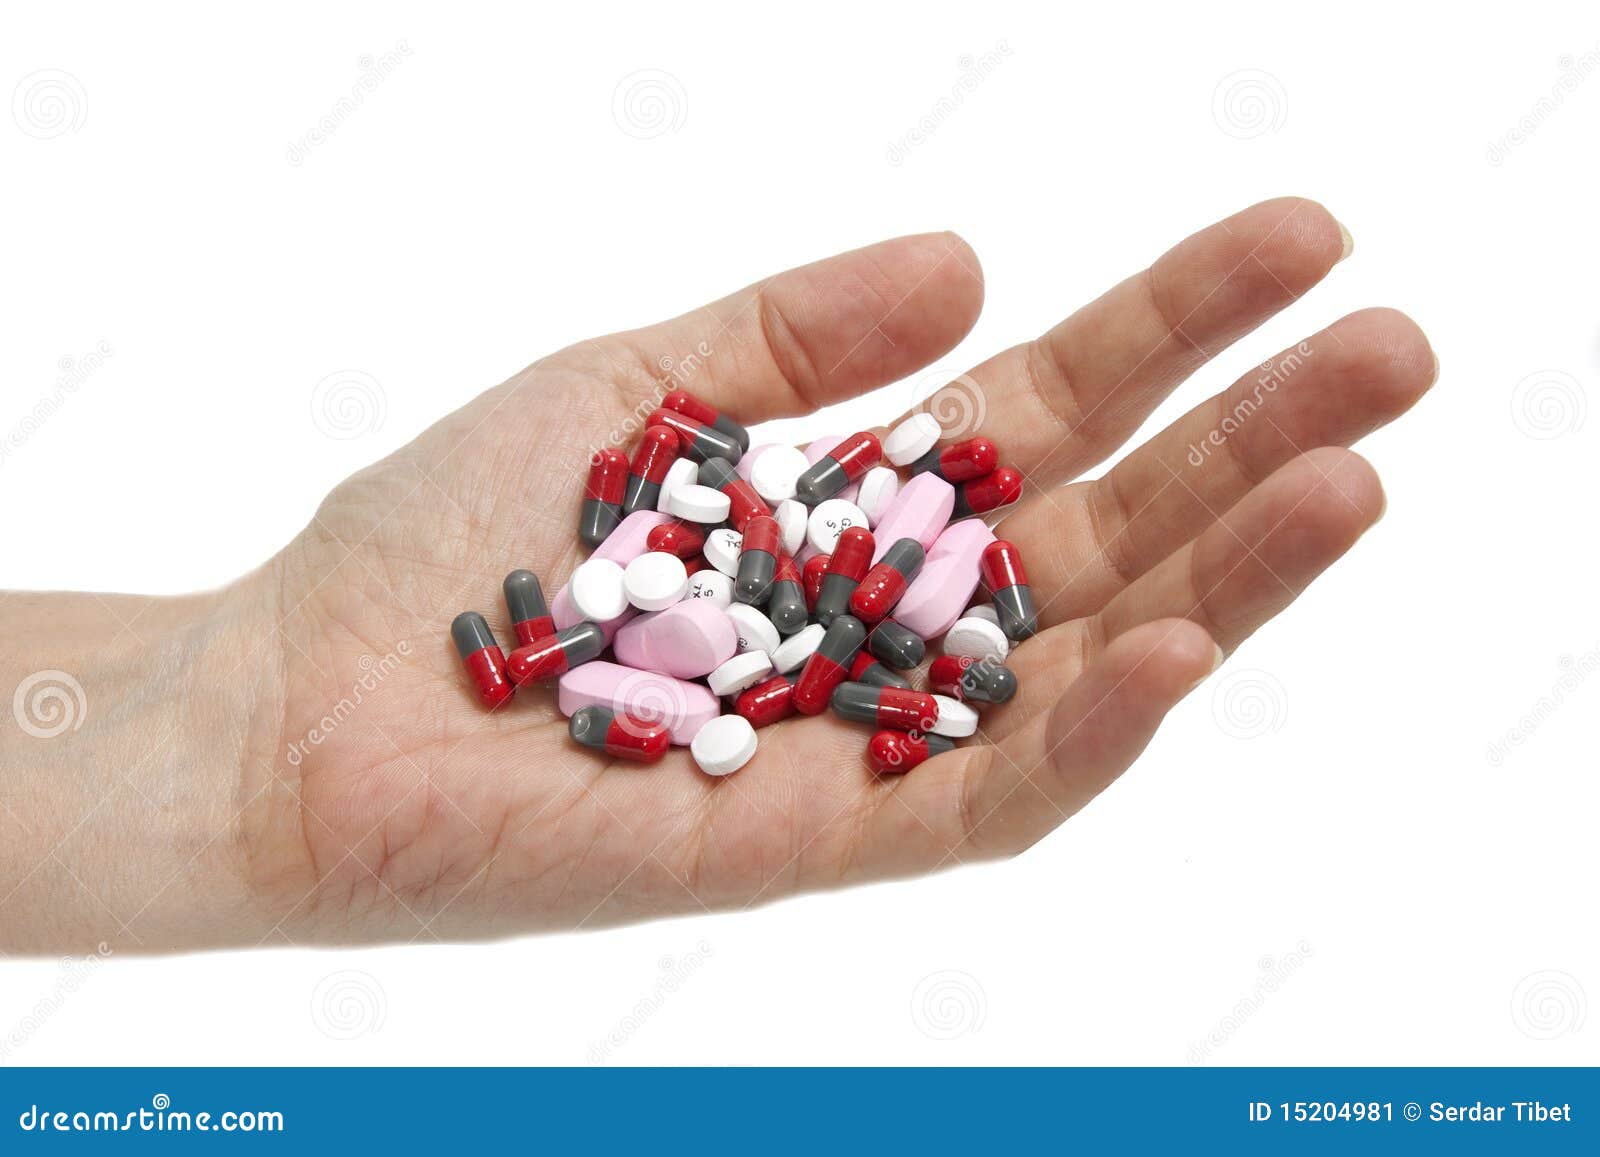 a handful drugs